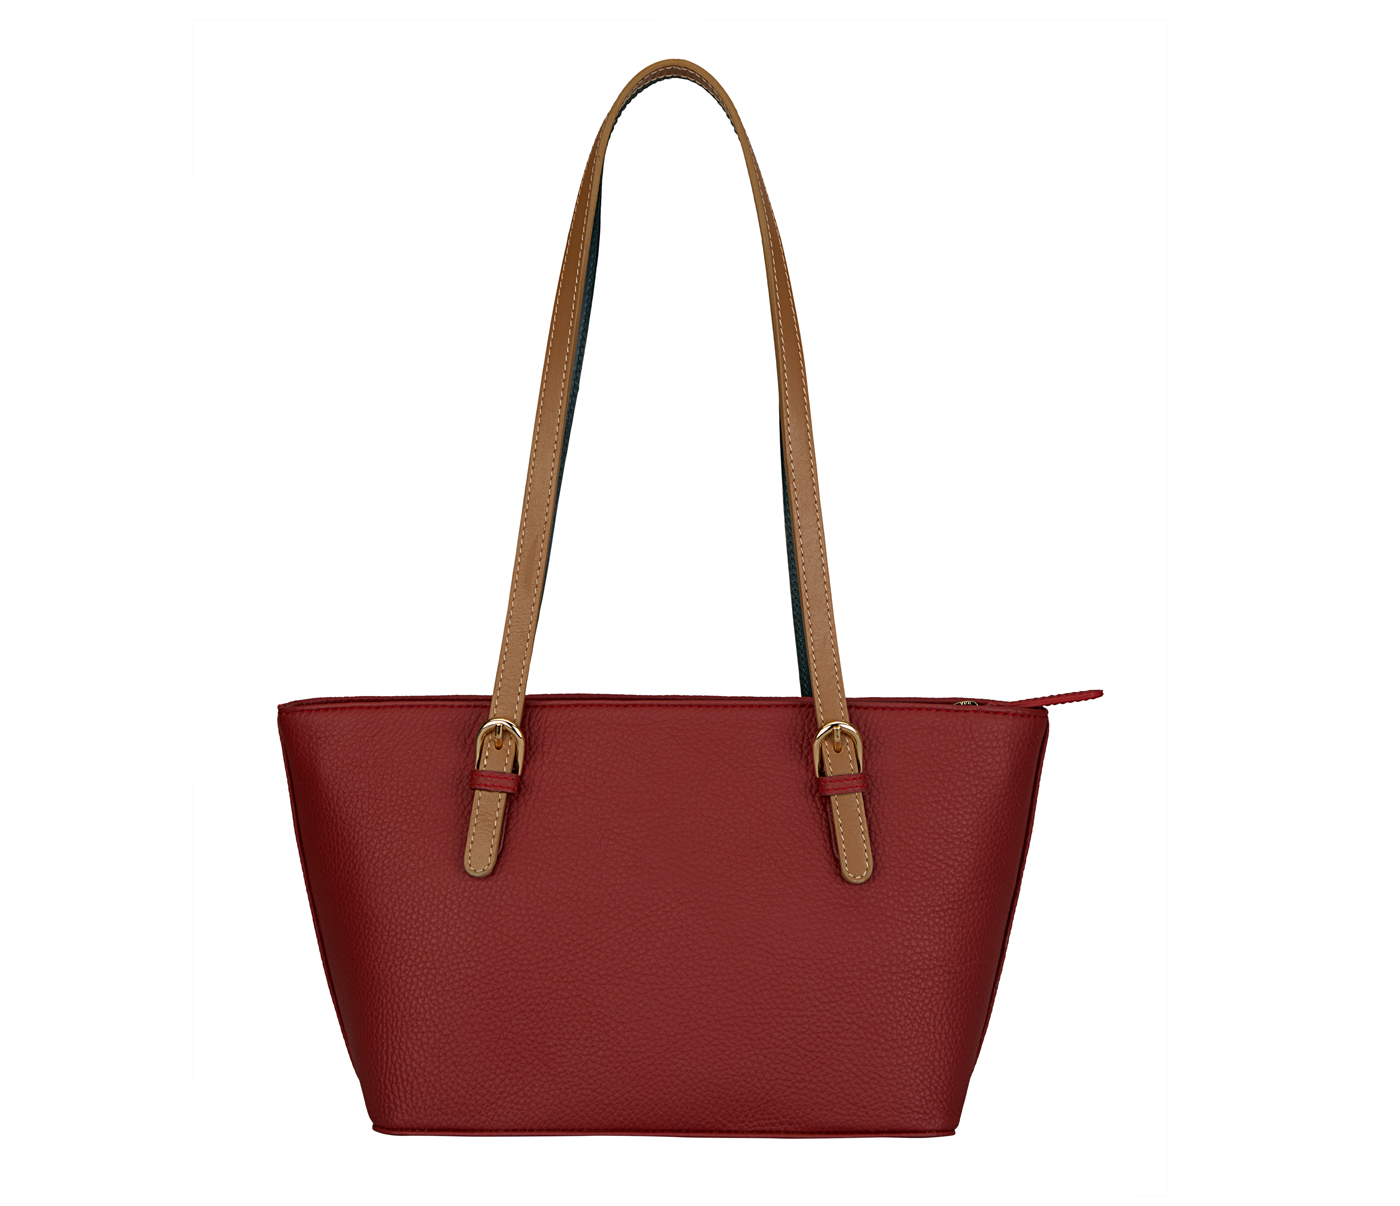 Buy Rosso Brunello Women Sling Bag Red [R1345] Online - Best Price Rosso  Brunello Women Sling Bag Red [R1345] - Justdial Shop Online.